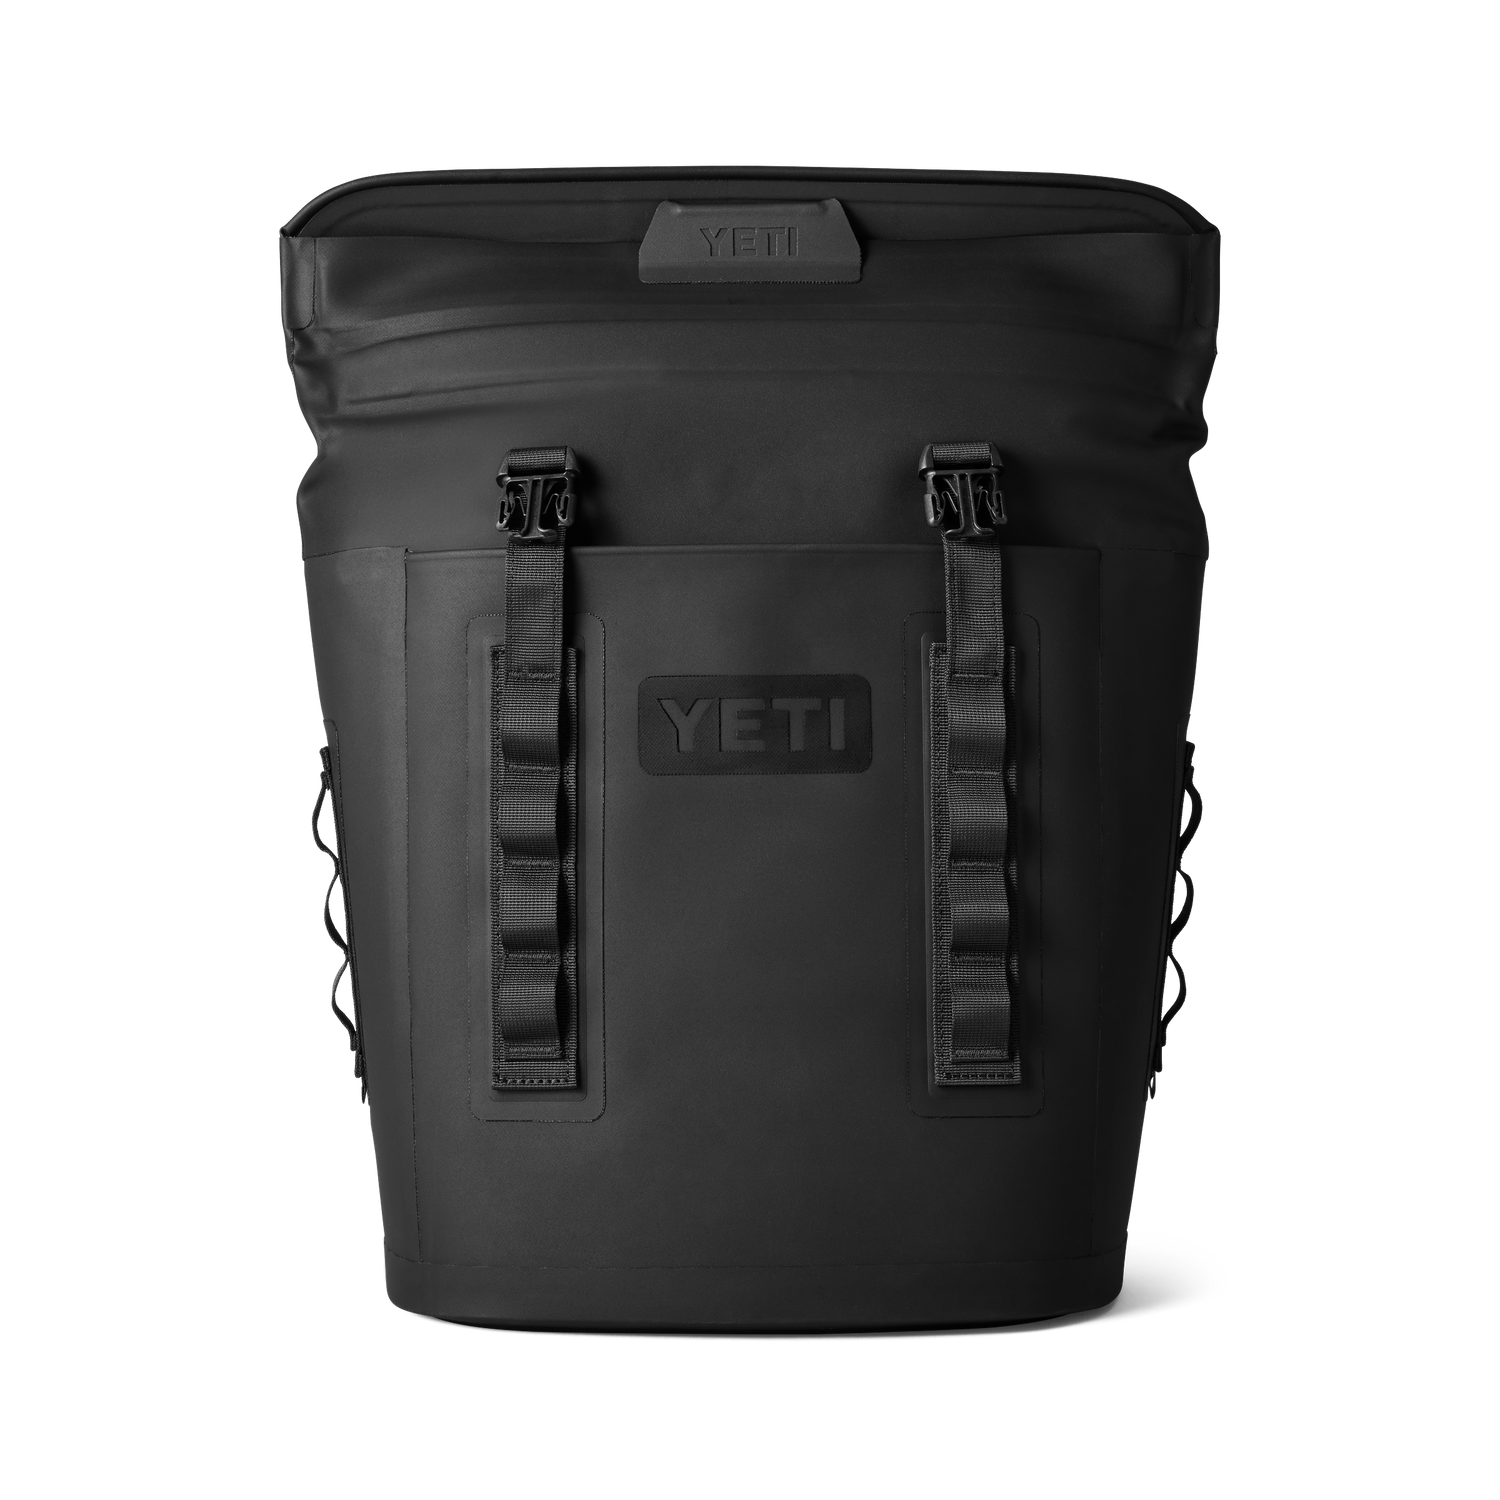 Yeti Hopper M12 Charcoal Backpack Cooler